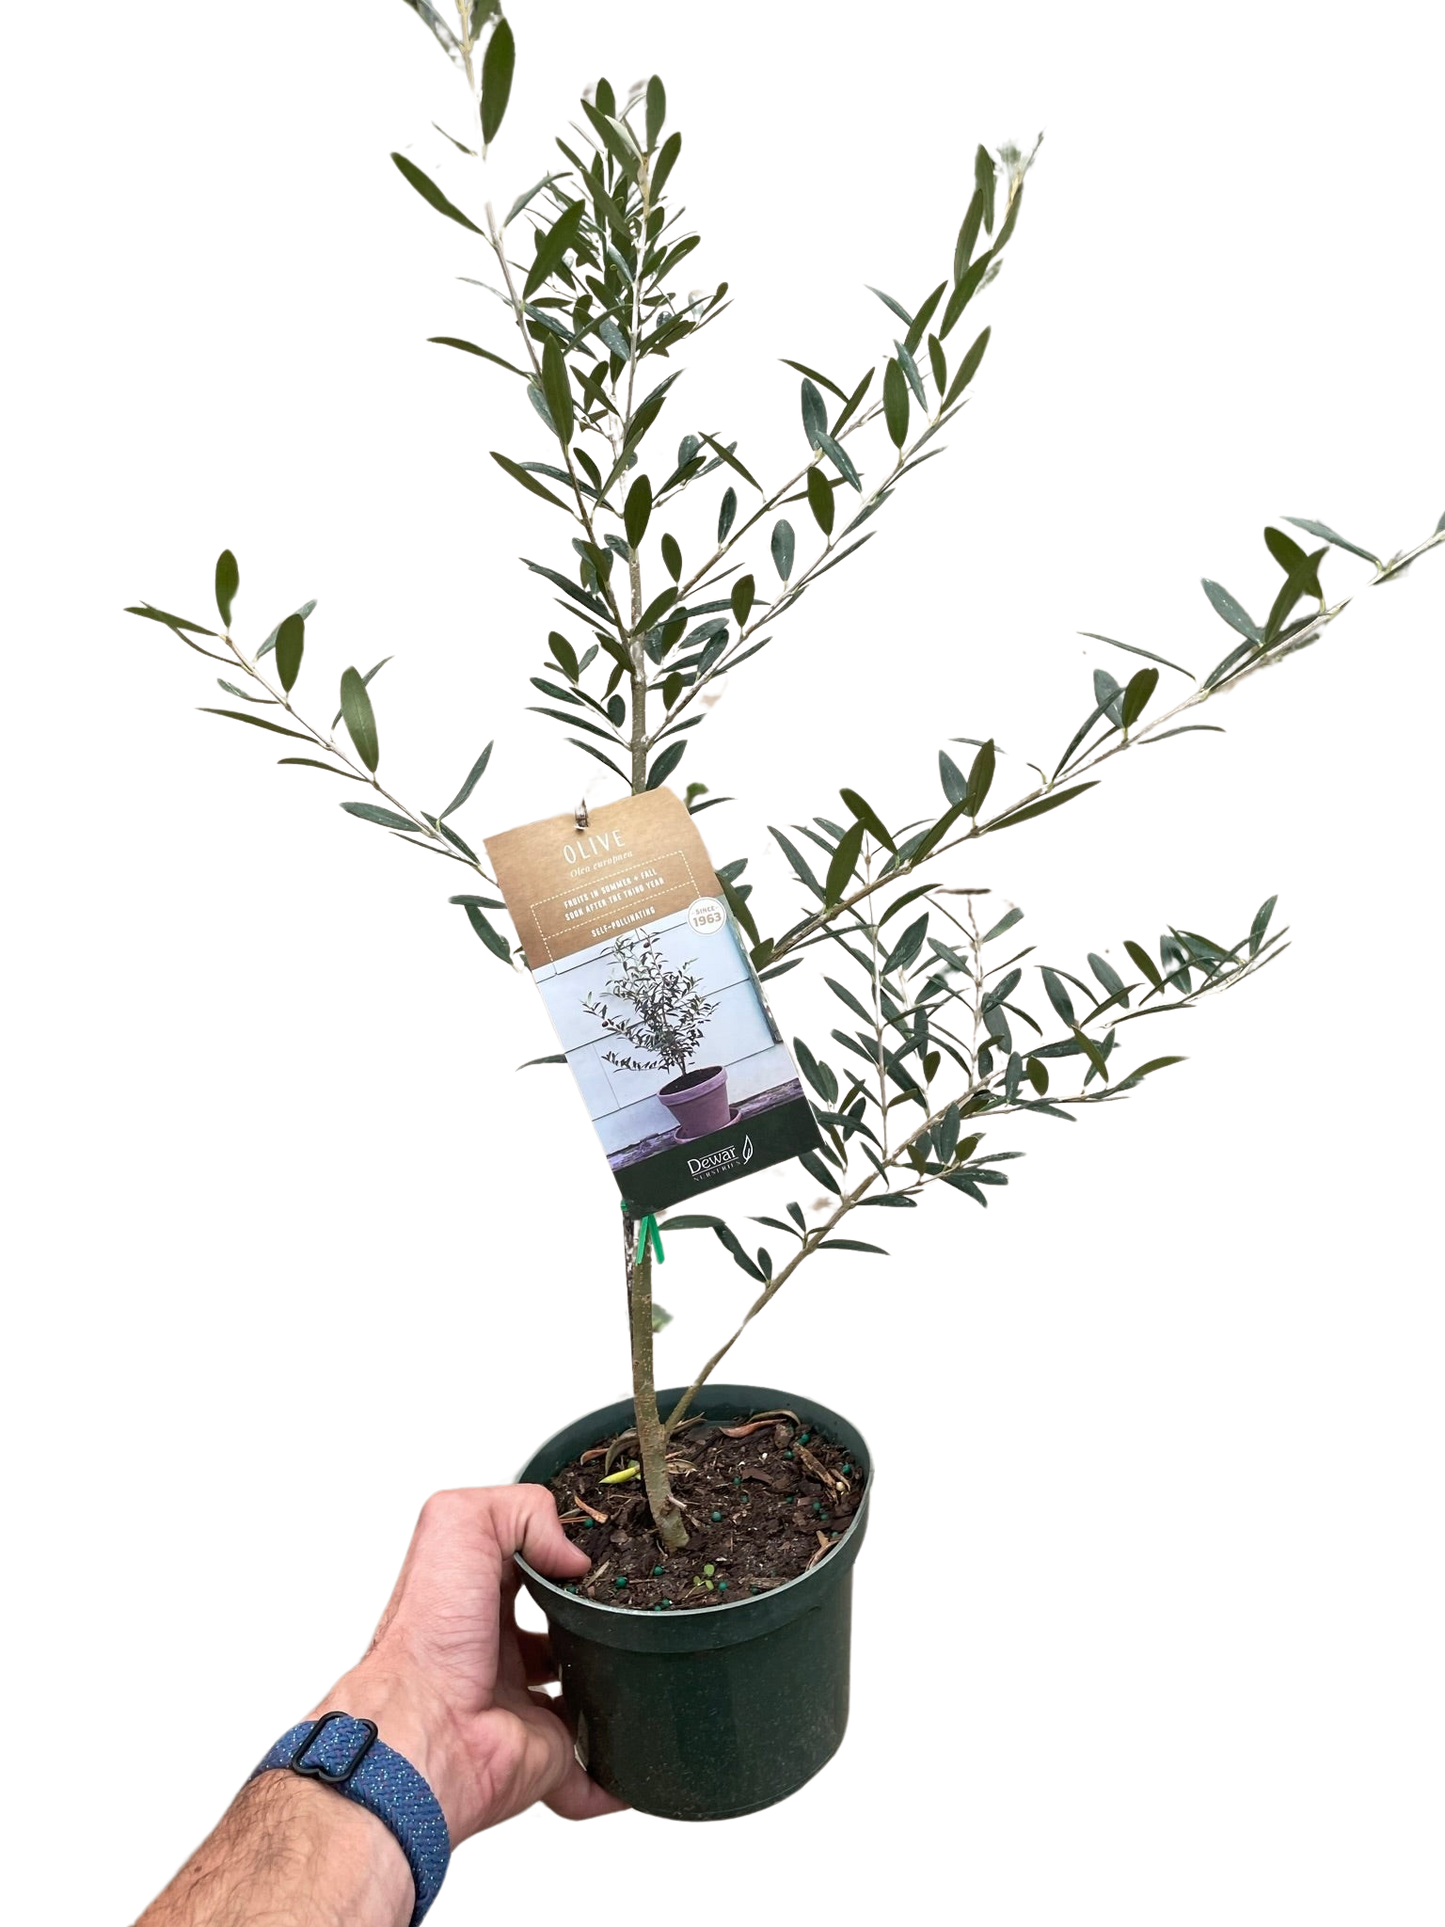 Common Olive Tree (Olea europaea)